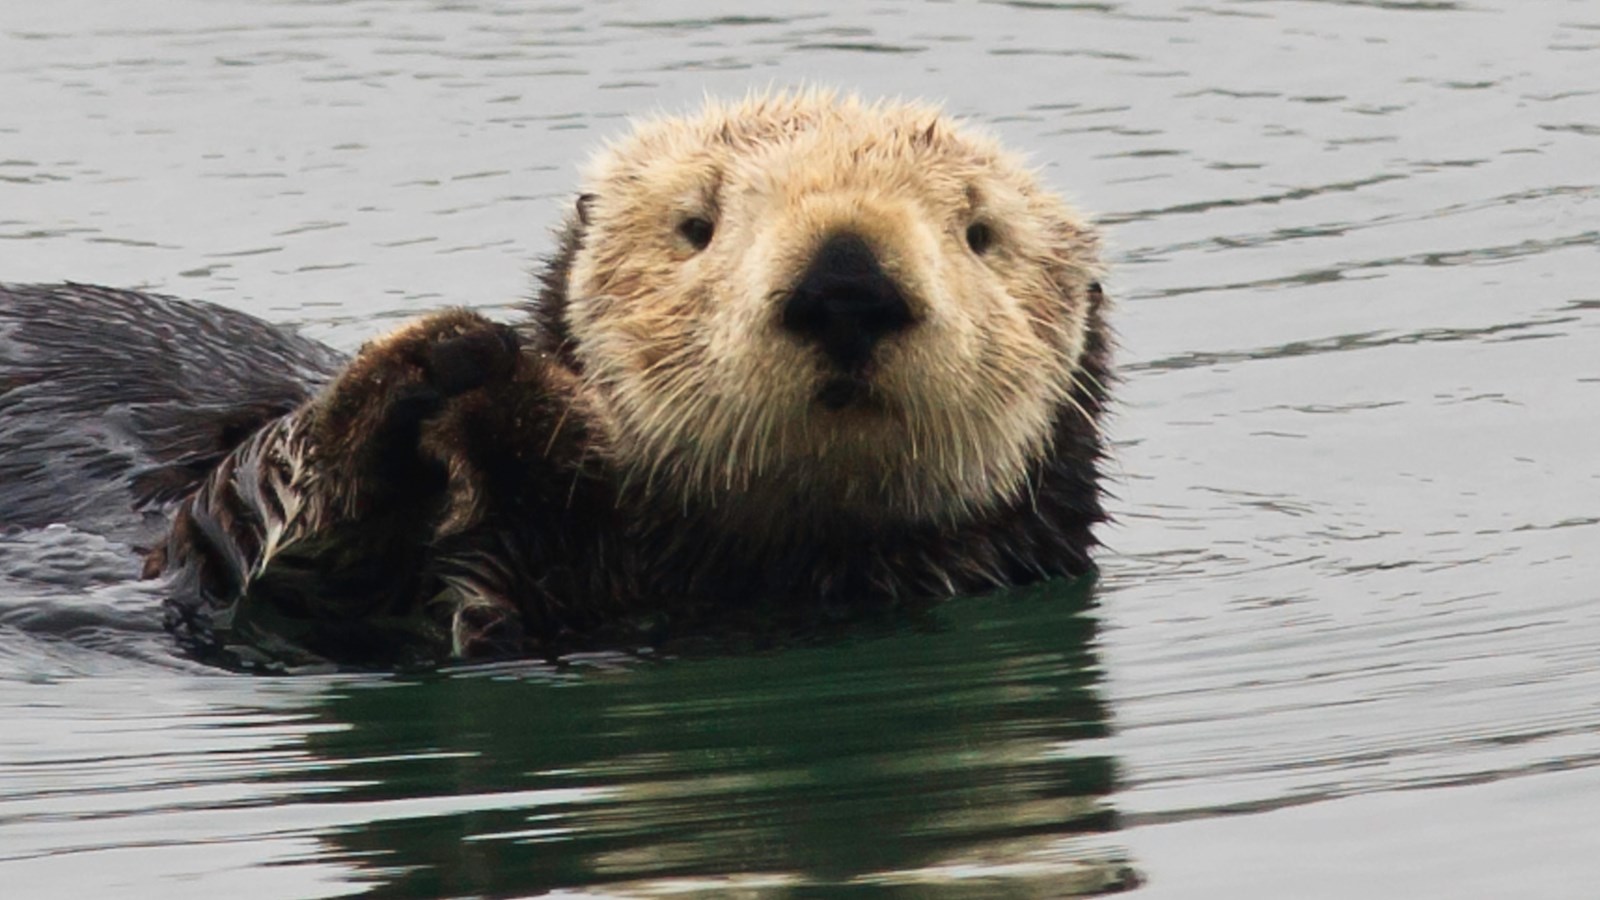 Sea Otter (. National Park Service)